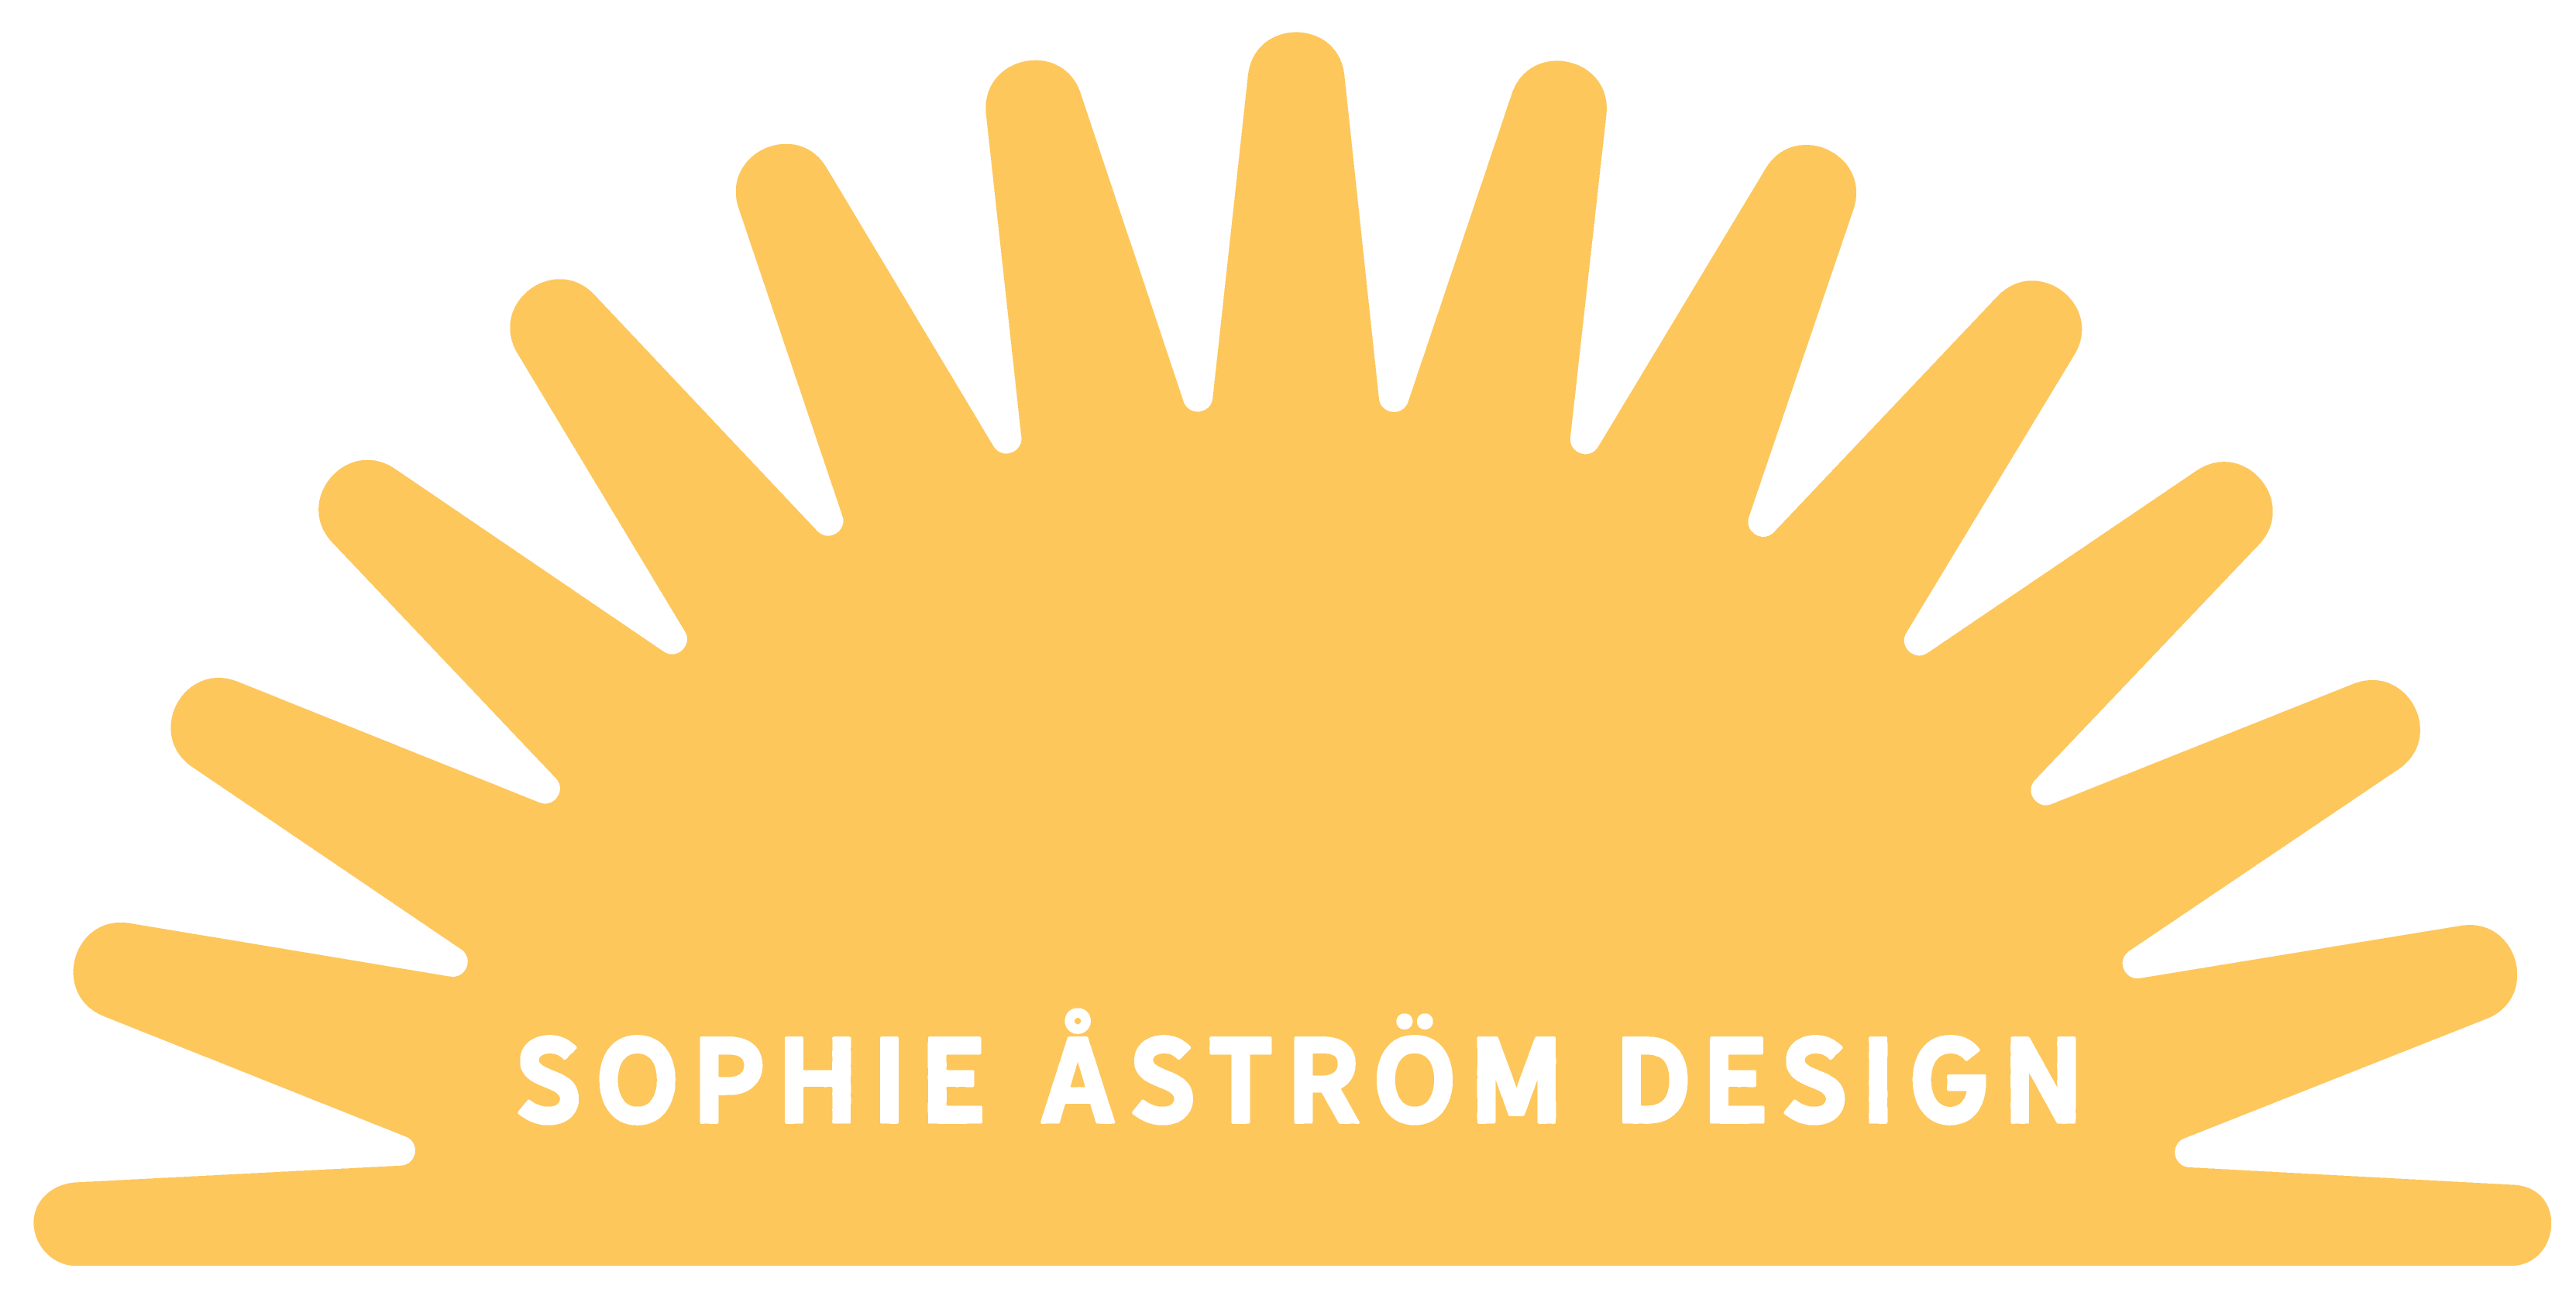 Sophie Åström Design